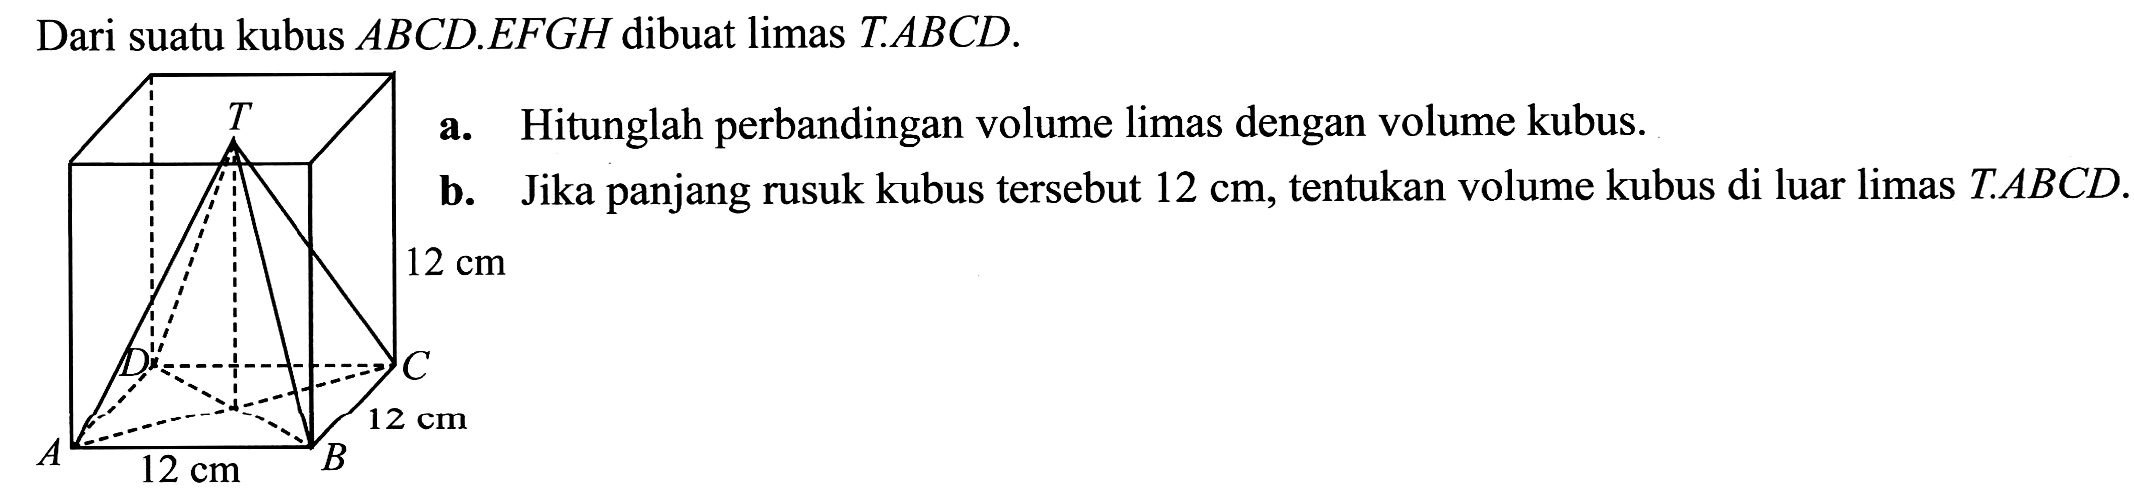 Dari suatu kubus  A B C D . E F G H  dibuat limas T.ABCD.
Hitunglah perbandingan volume limas dengan volume kubus.
b. Jika panjang rusuk kubus tersebut  12 cm , tentukan volume kubus di luar limas  T . A B C D .